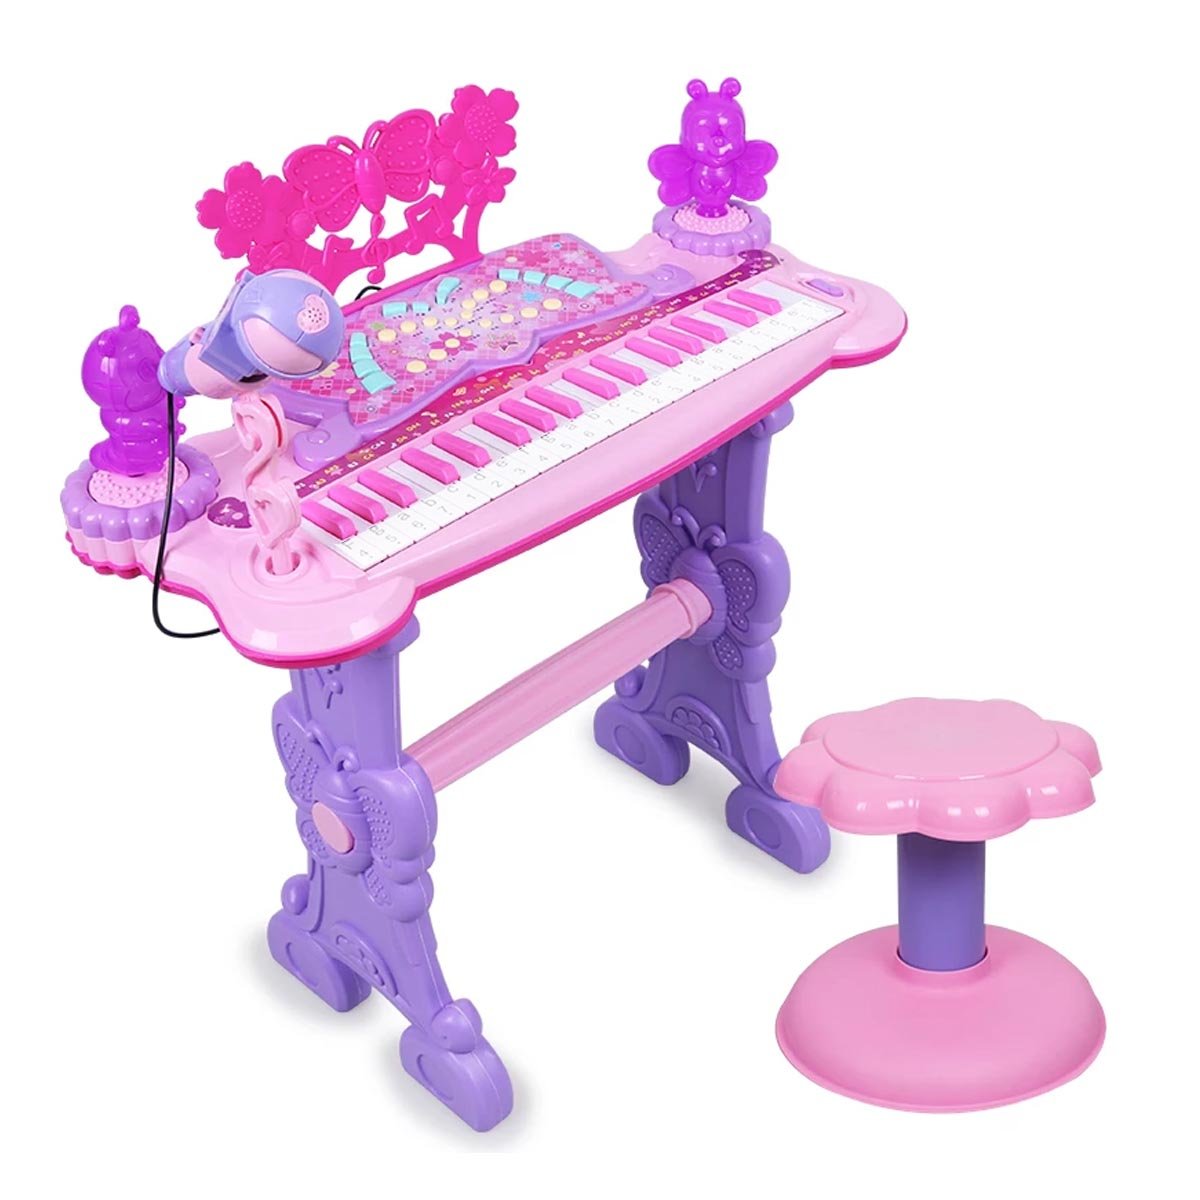 Piano Infantil De Importación Musical Rosa